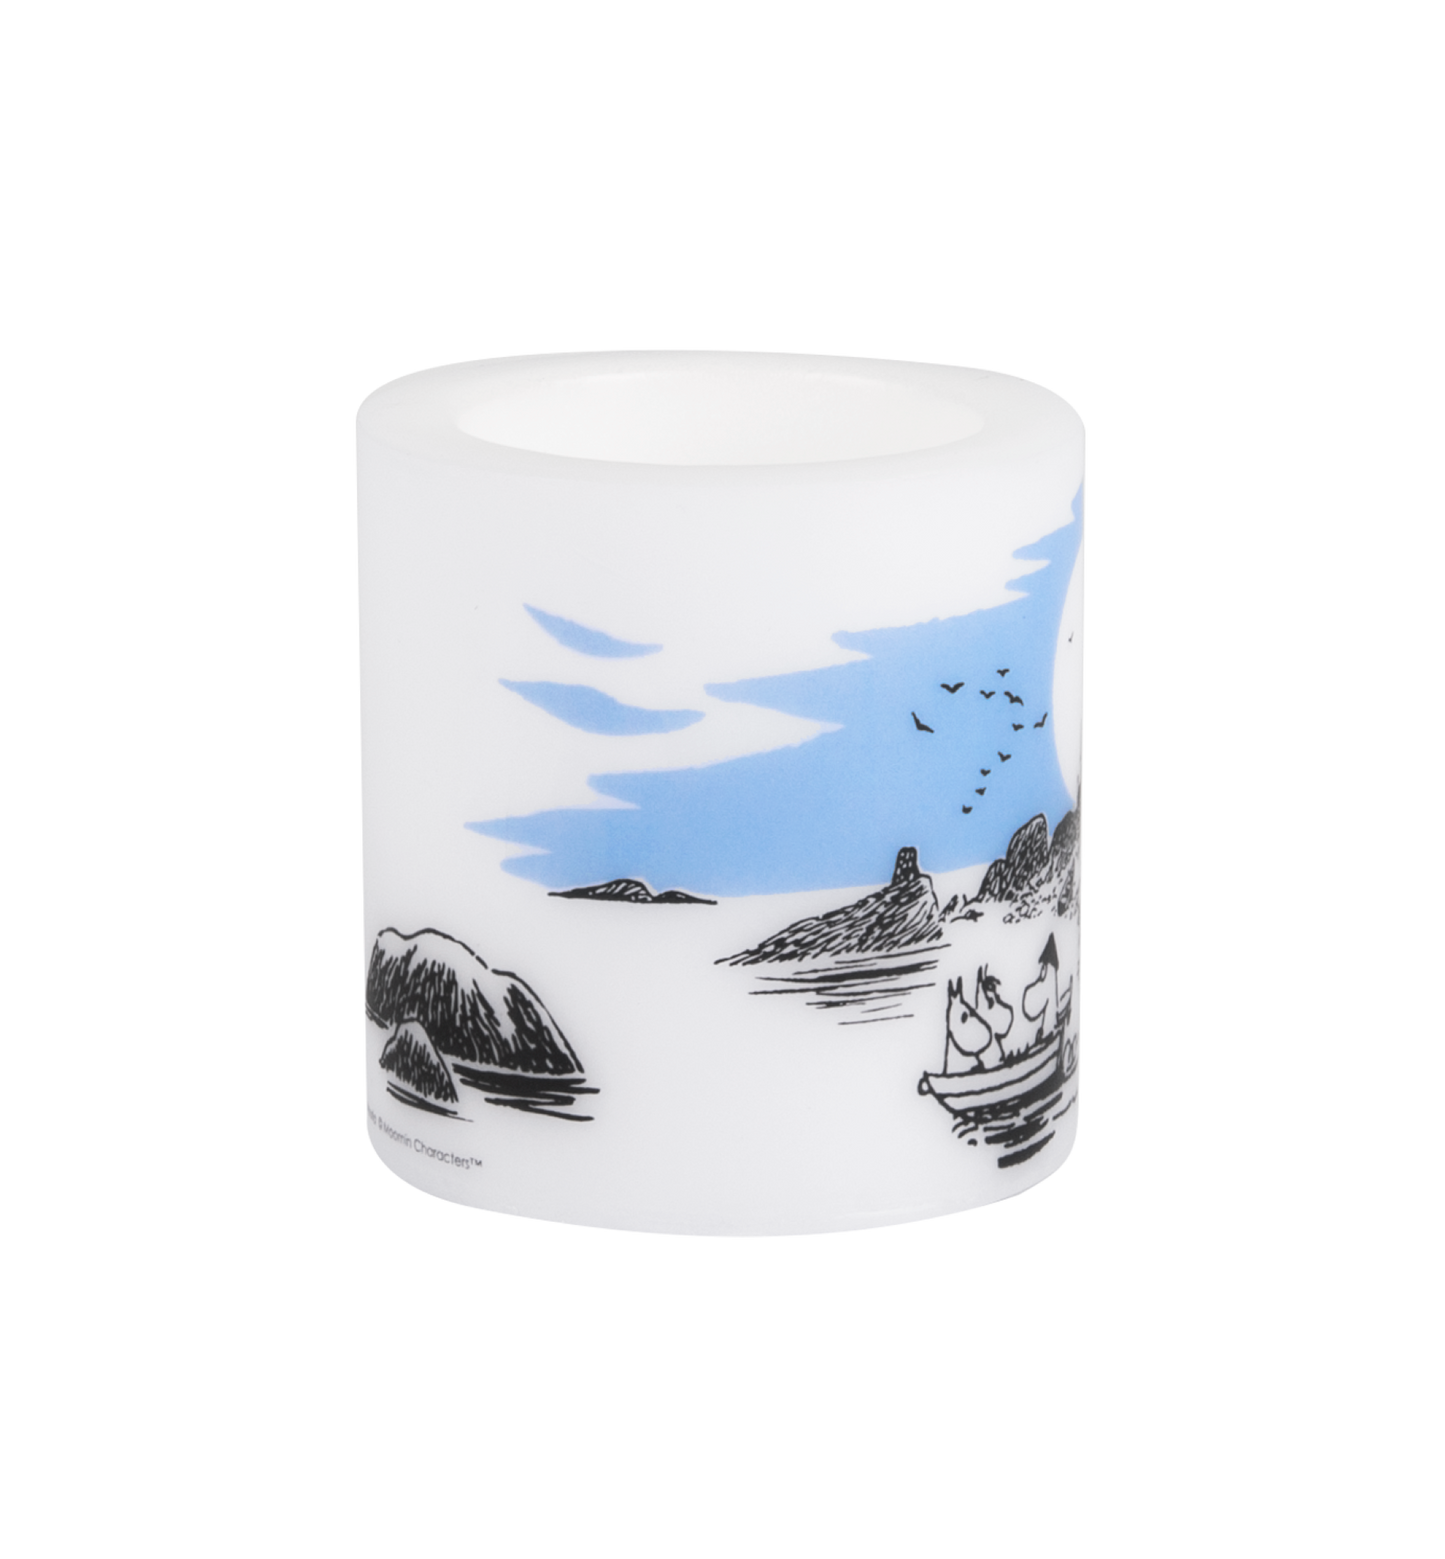 Moomin "Island" Candle